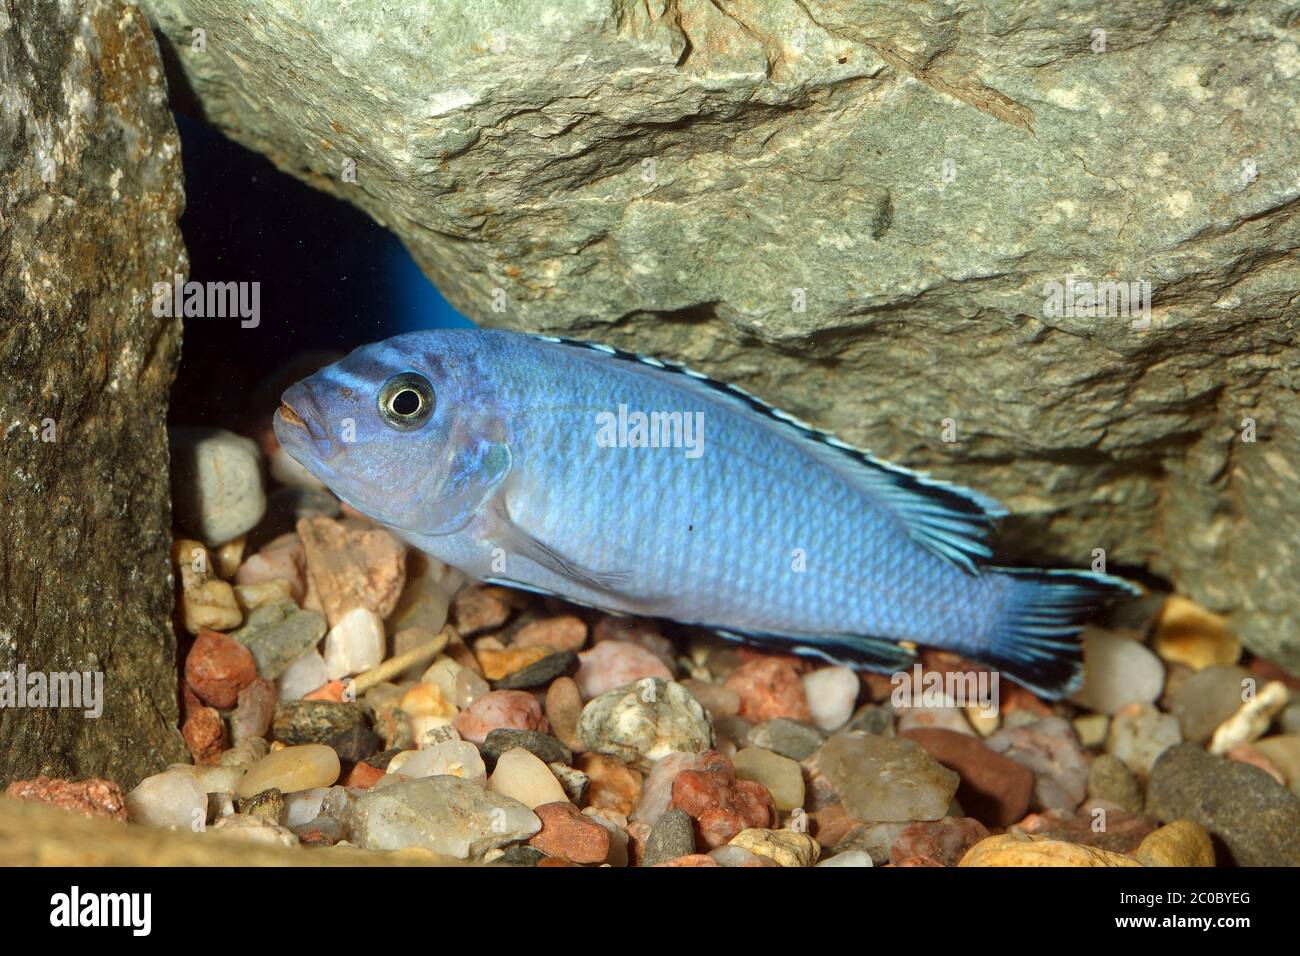 Pseudotropheus fish Stock Photo